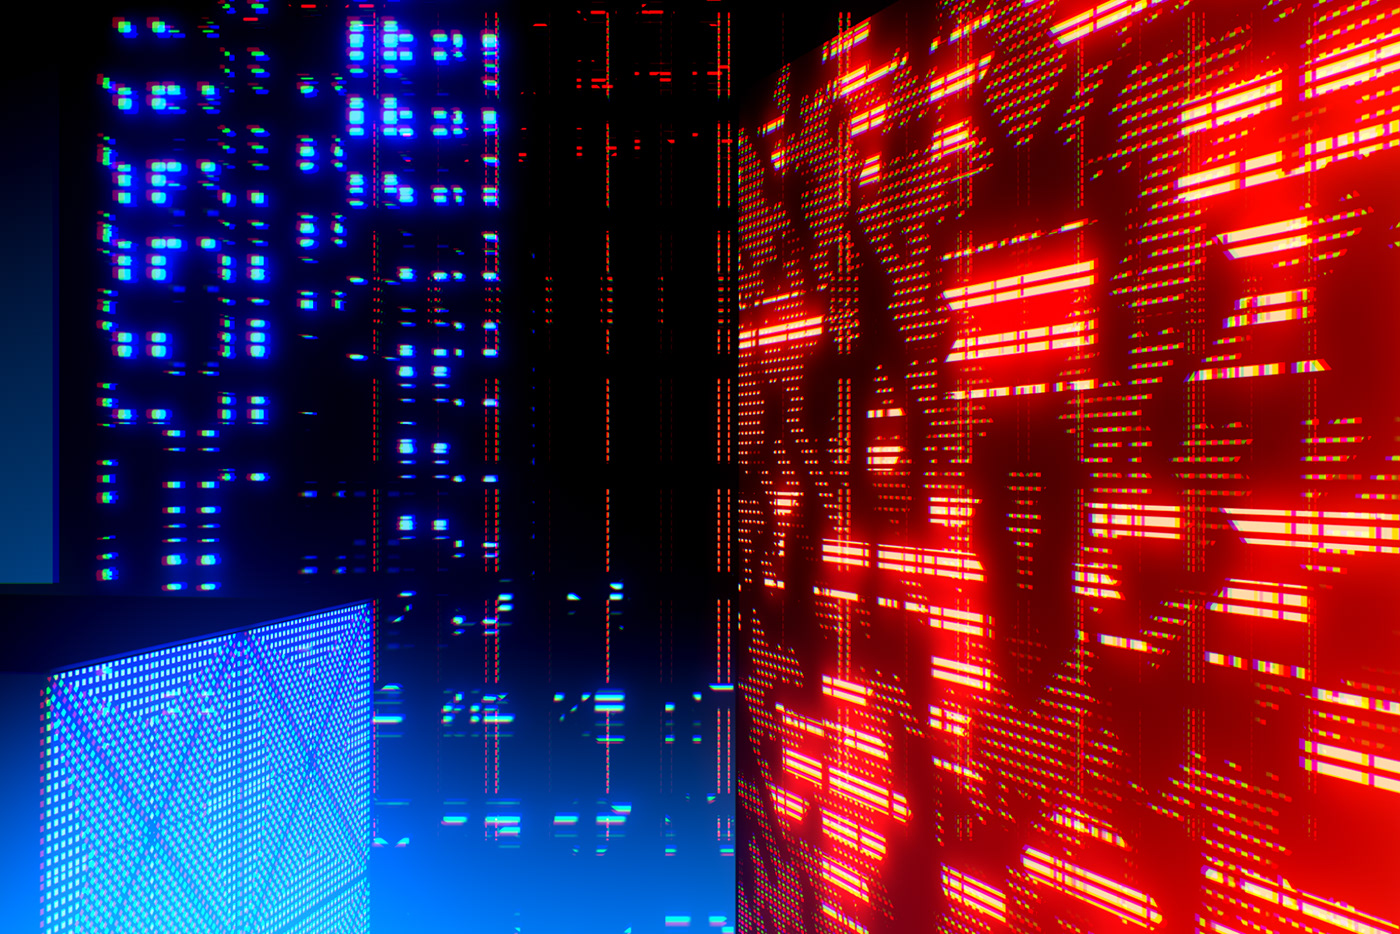 Cyberpunk cyberpunk 2077 futuristic greeble hologram Interface ui hud gui UI UX design unity Unreal Engine